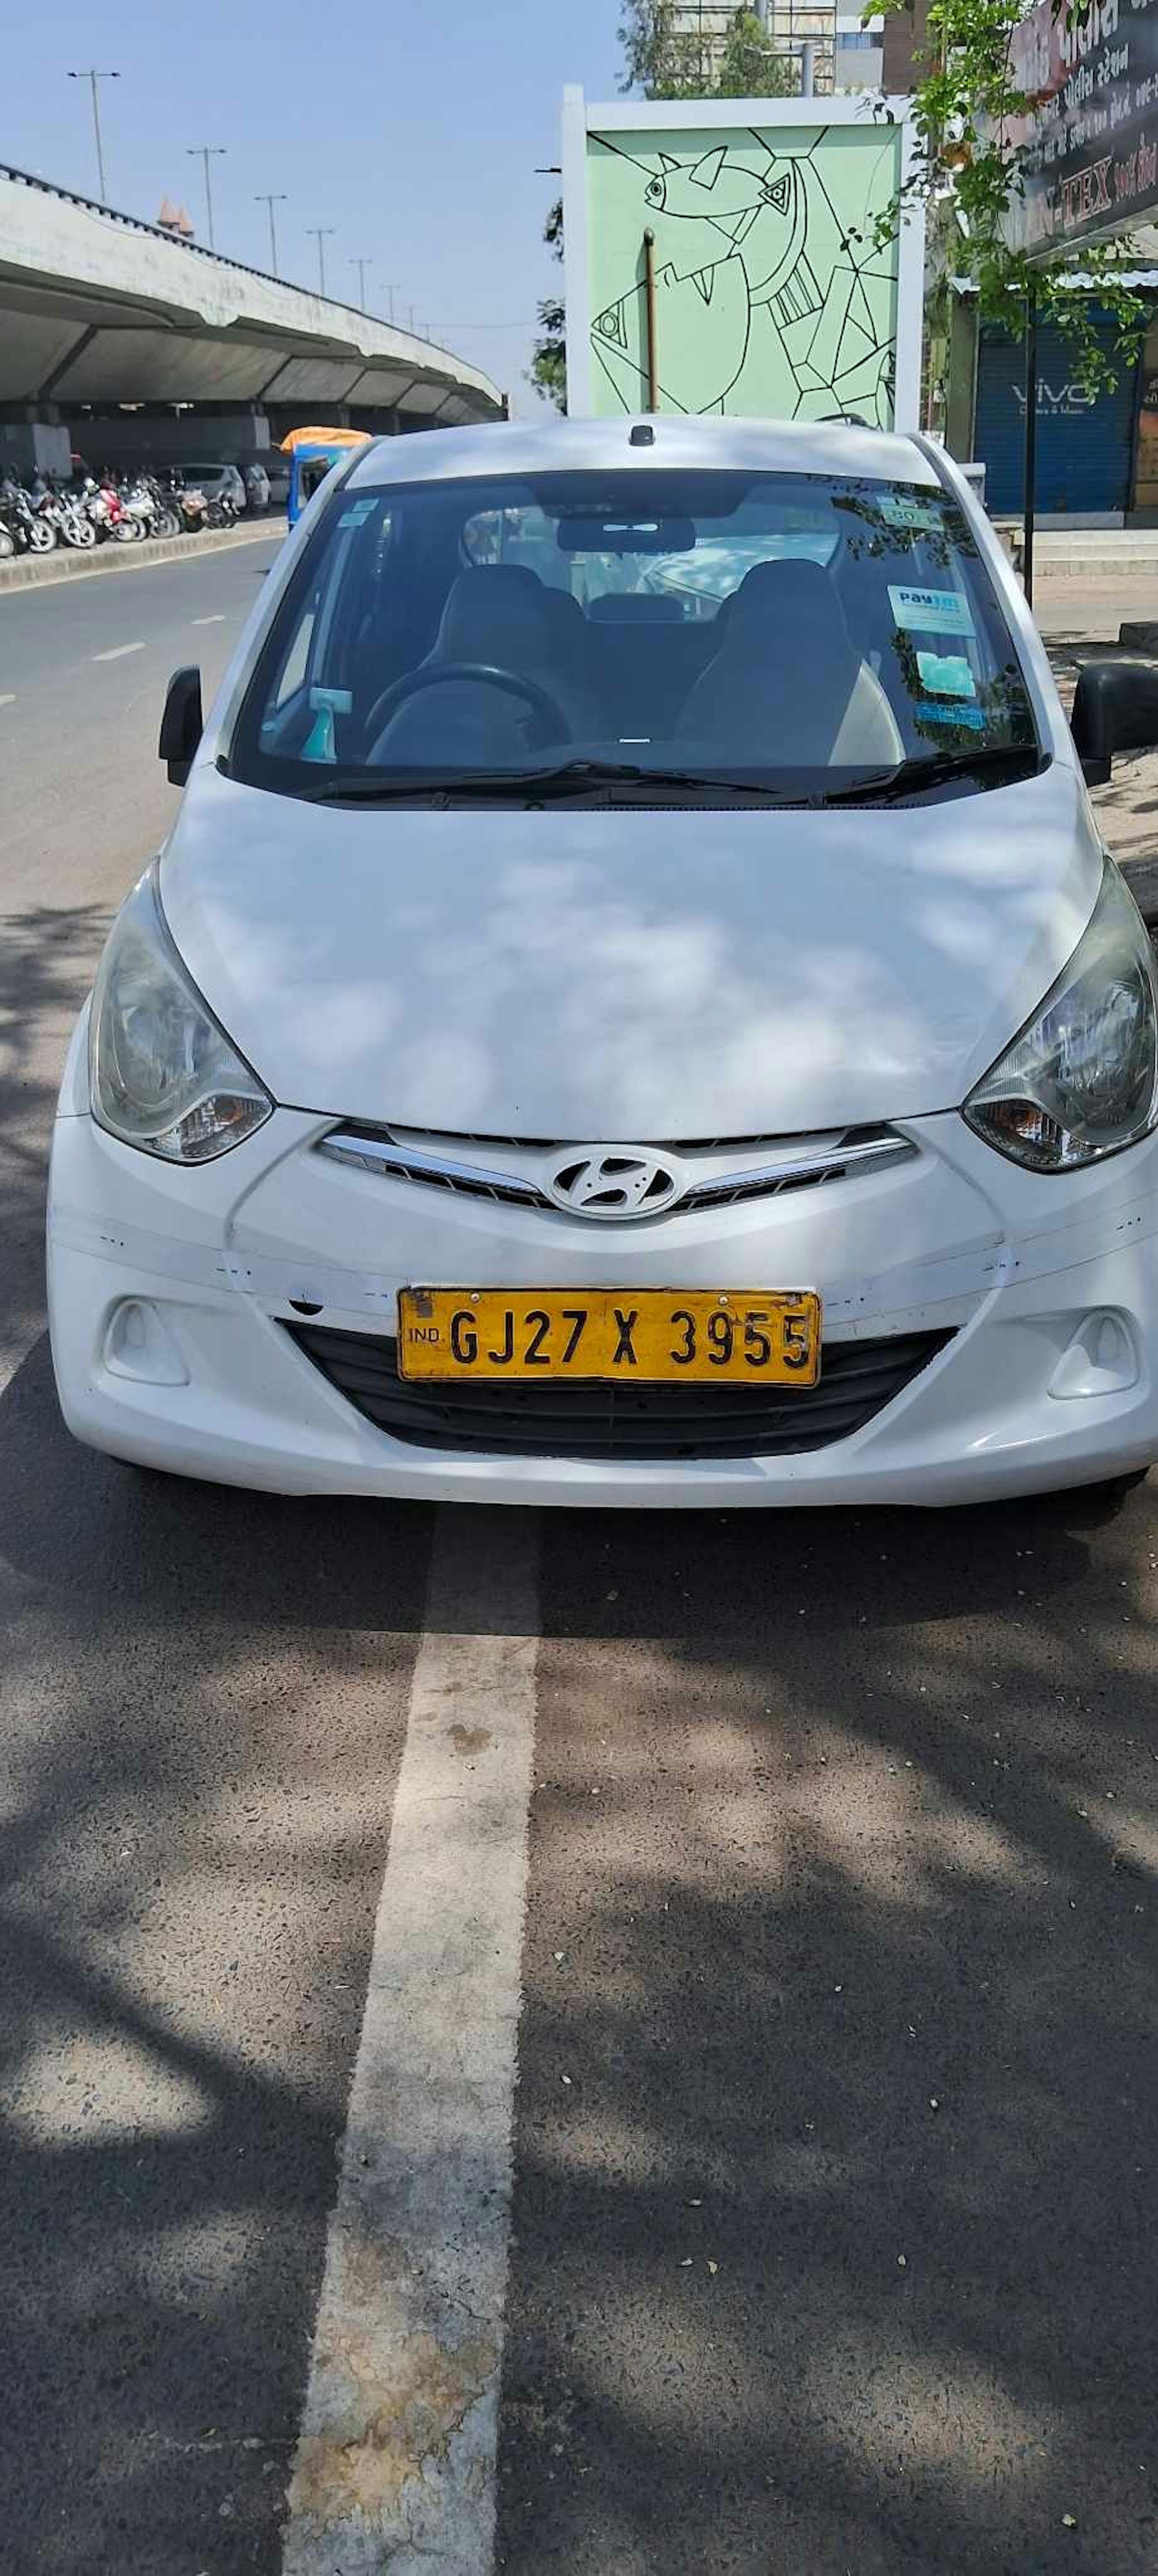 View - Hyundai EON photos, Hyundai EON available in Ahmedabad, make deal in 225000